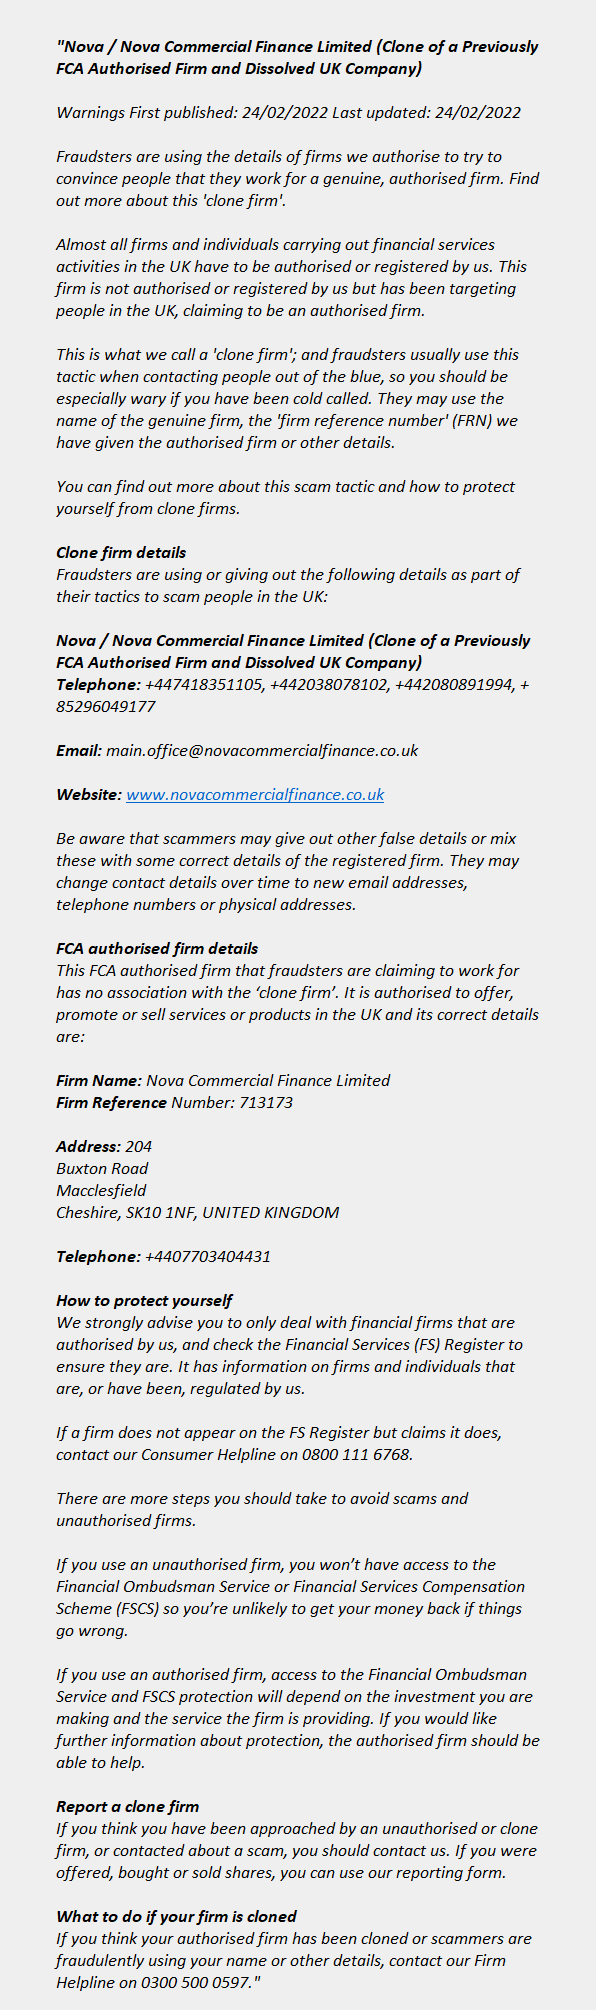 Nova / Nova Commercial Finance Limited (Clone) - Novacommercialfinance.co.uk (Clone)